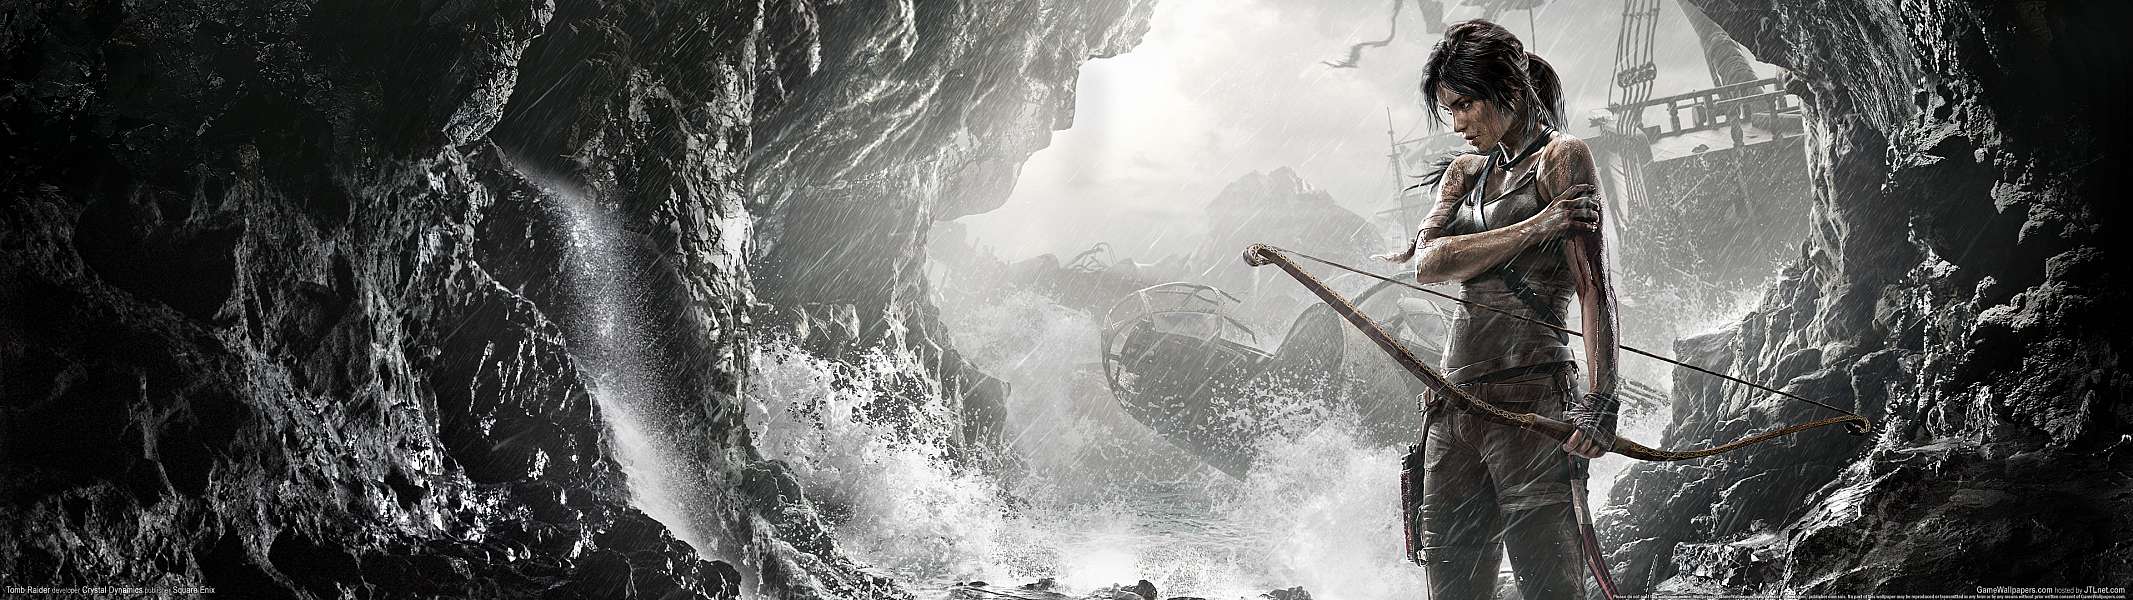 Tomb Raider dual screen fondo de escritorio